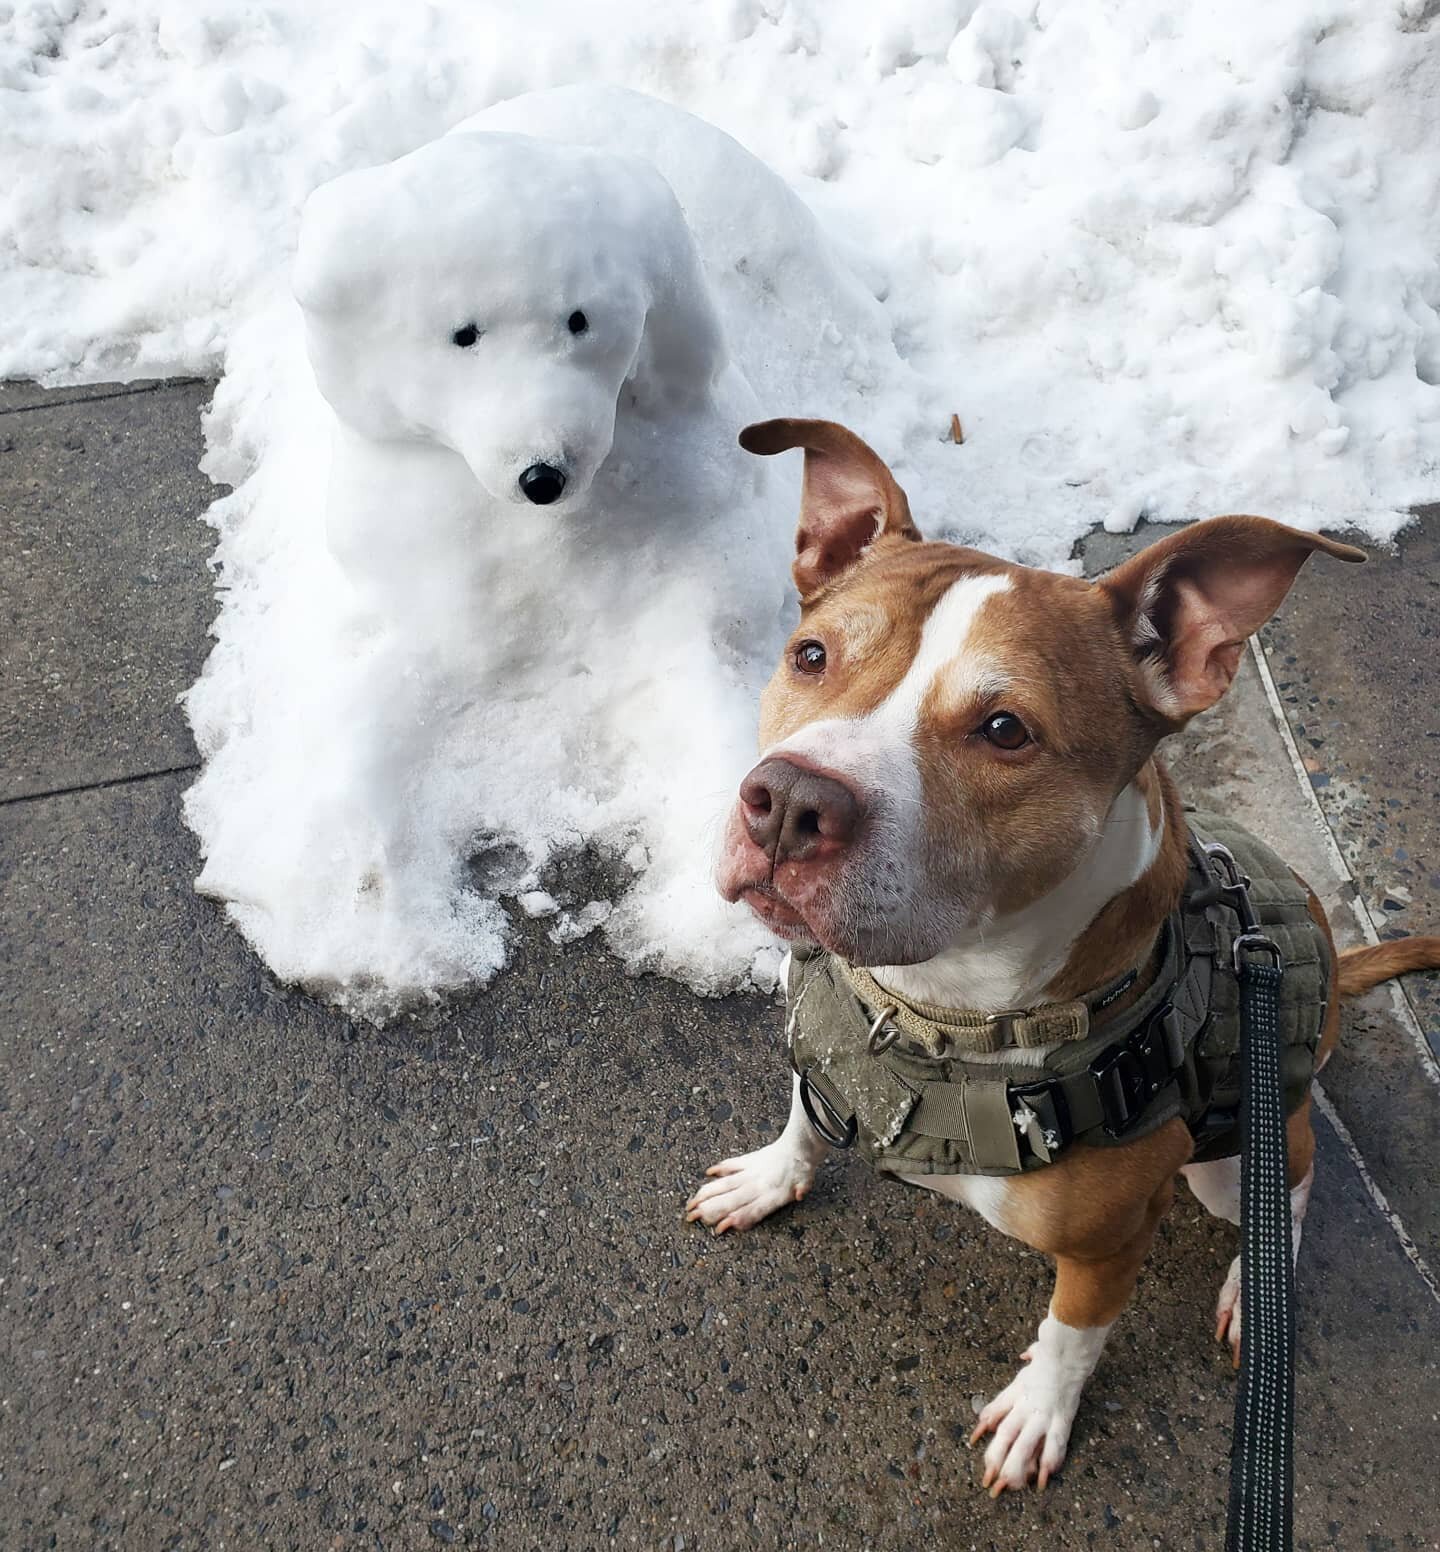 Frankie and his snow pal ☃️🐶
&deg;
&deg;
&deg;
#dogsofinstagram #dogwalkersofinstagram #snowday
#nyc #brooklyn #dogs #mawandpawsdogwalking